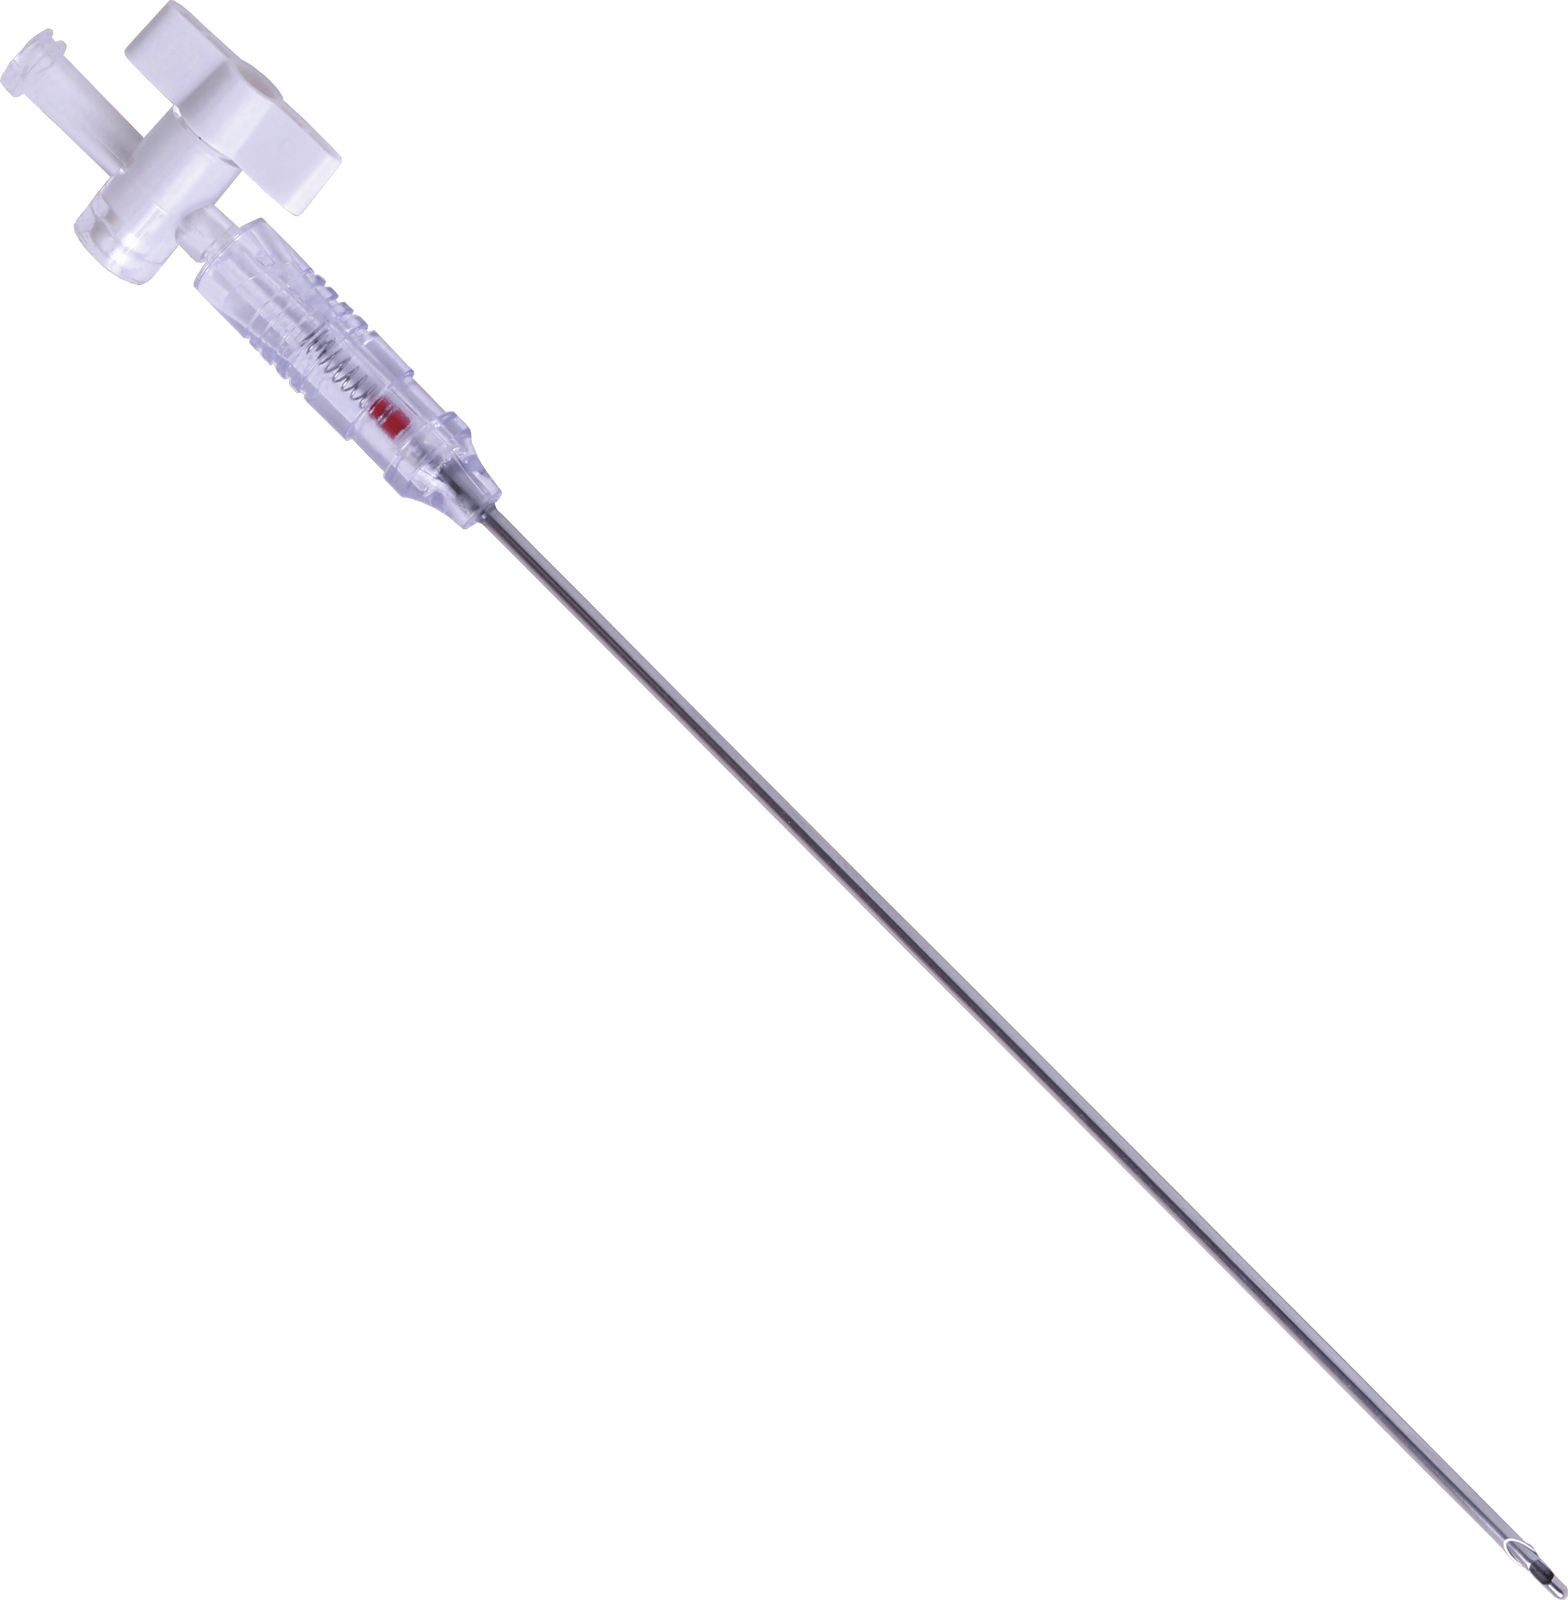 Veress pneumoperitoneum needle